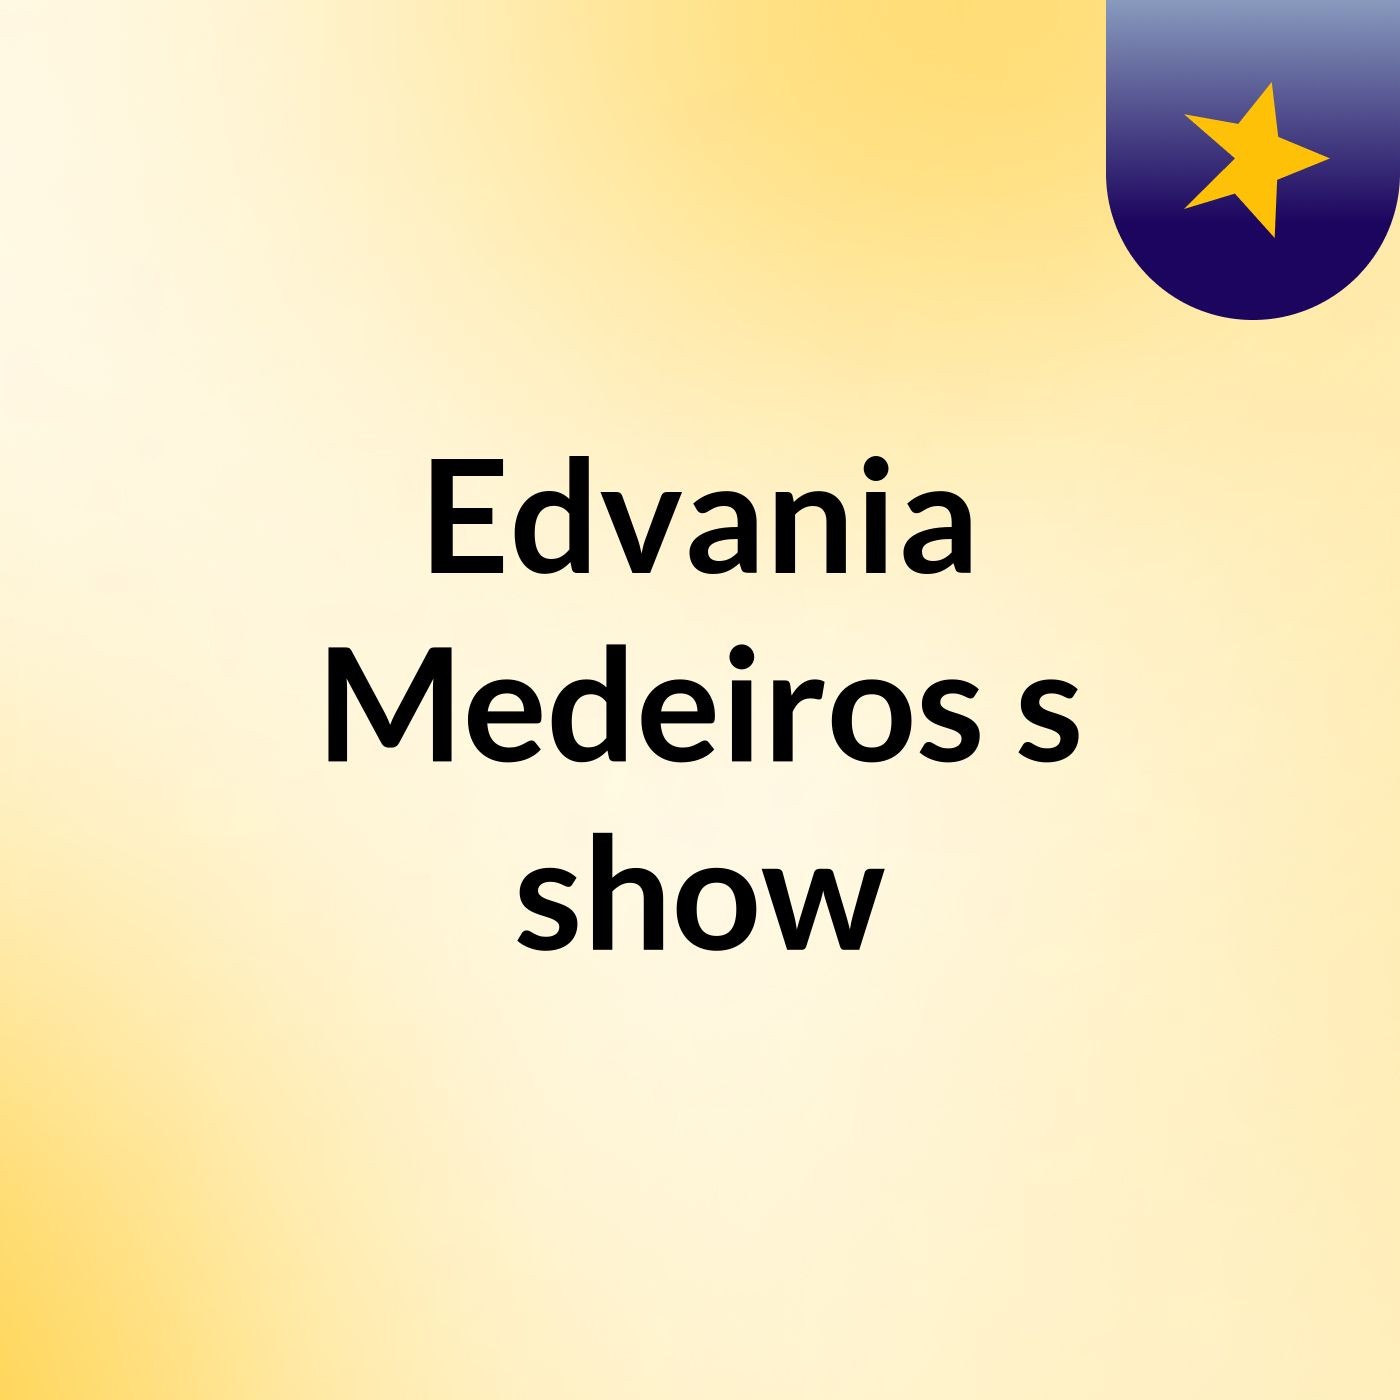 Edvania Medeiros's show